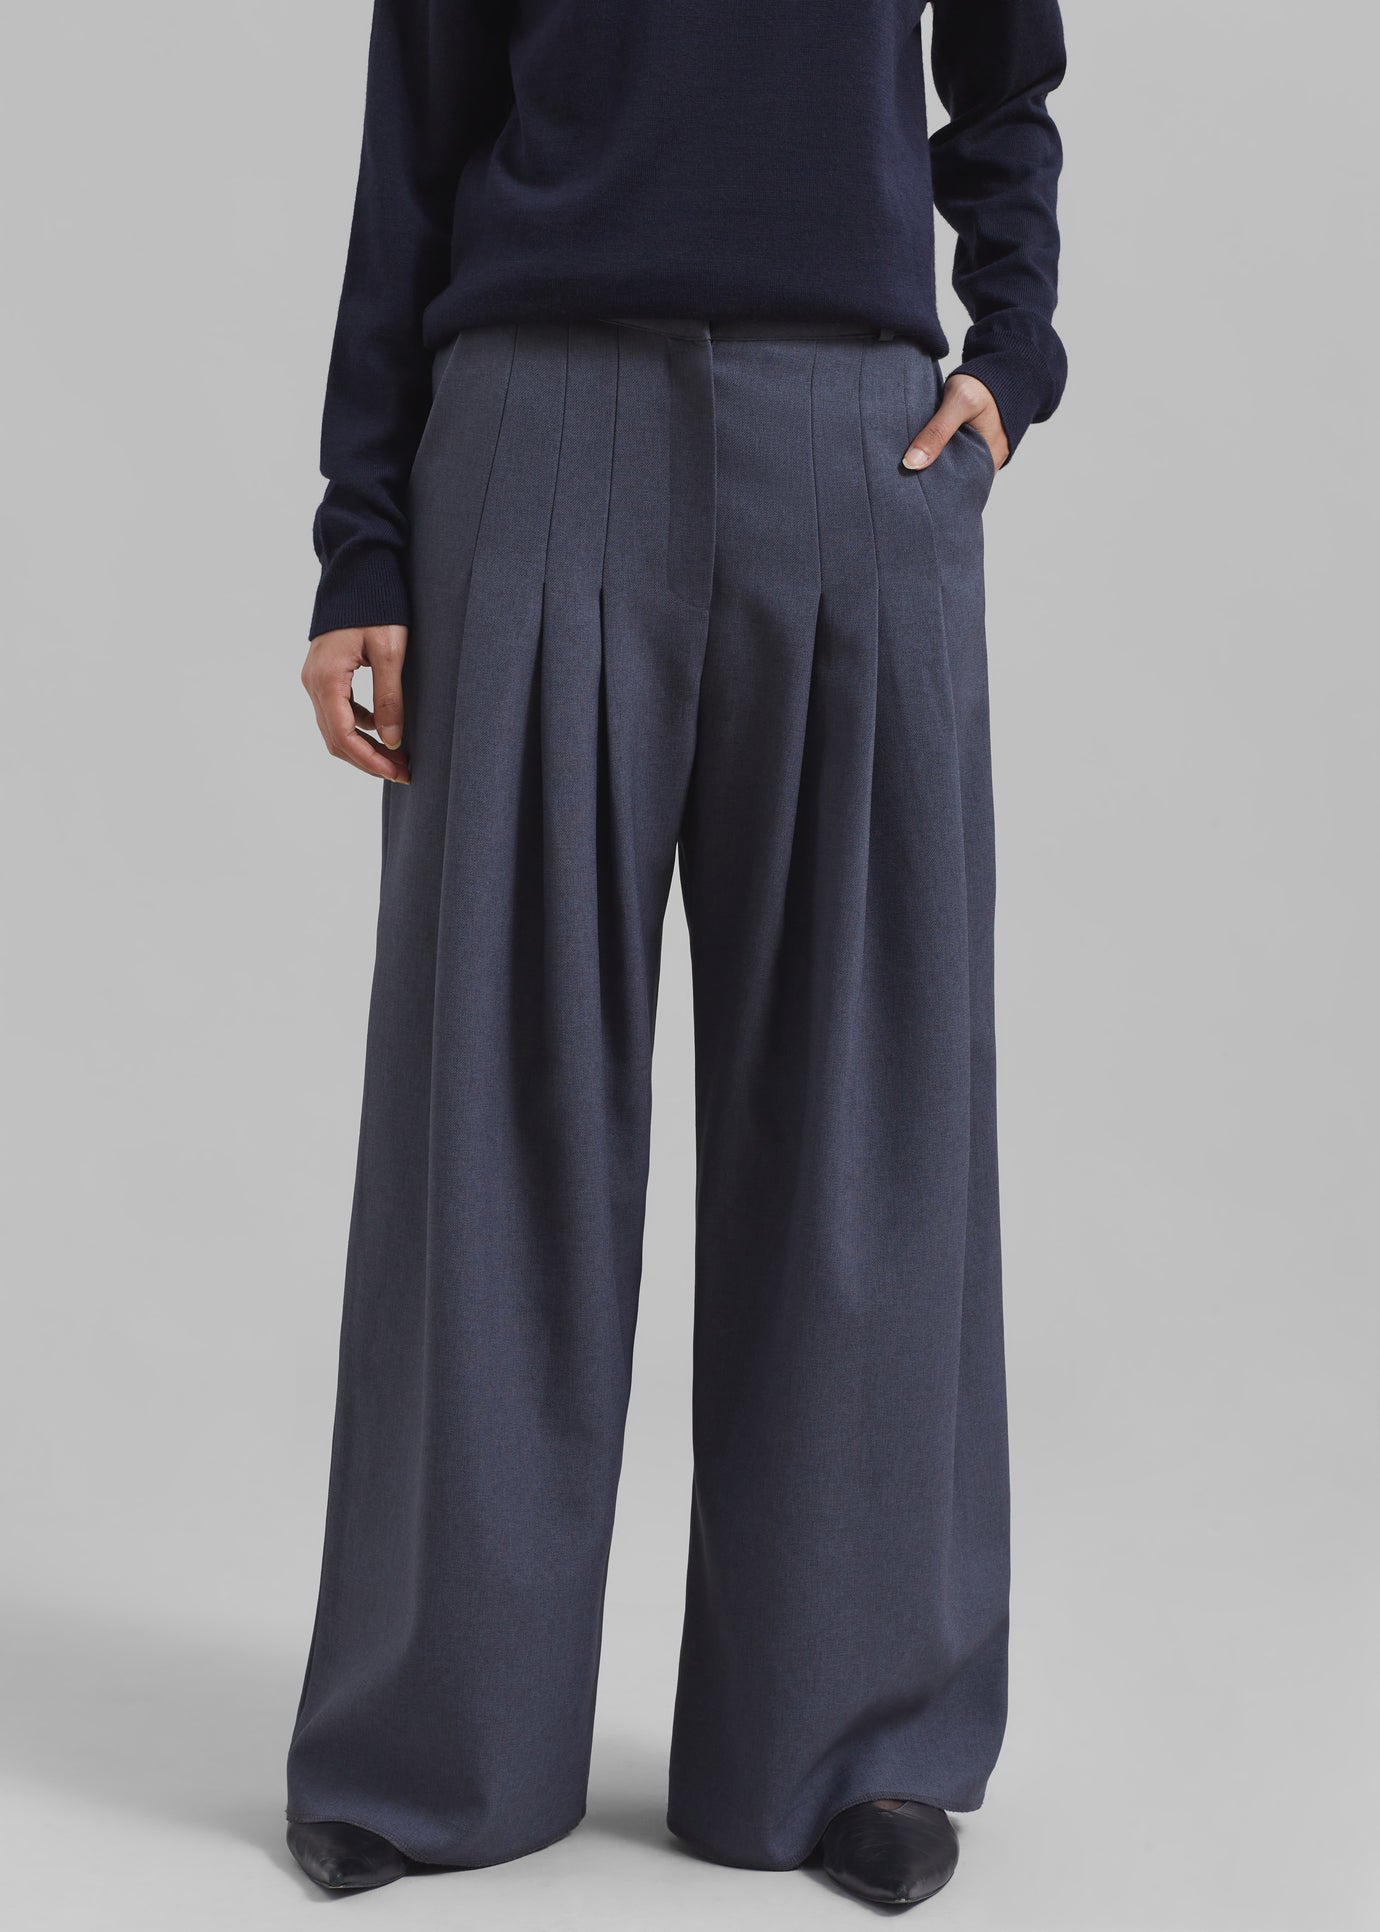 Regina Pleated Trousers - Grey - 1